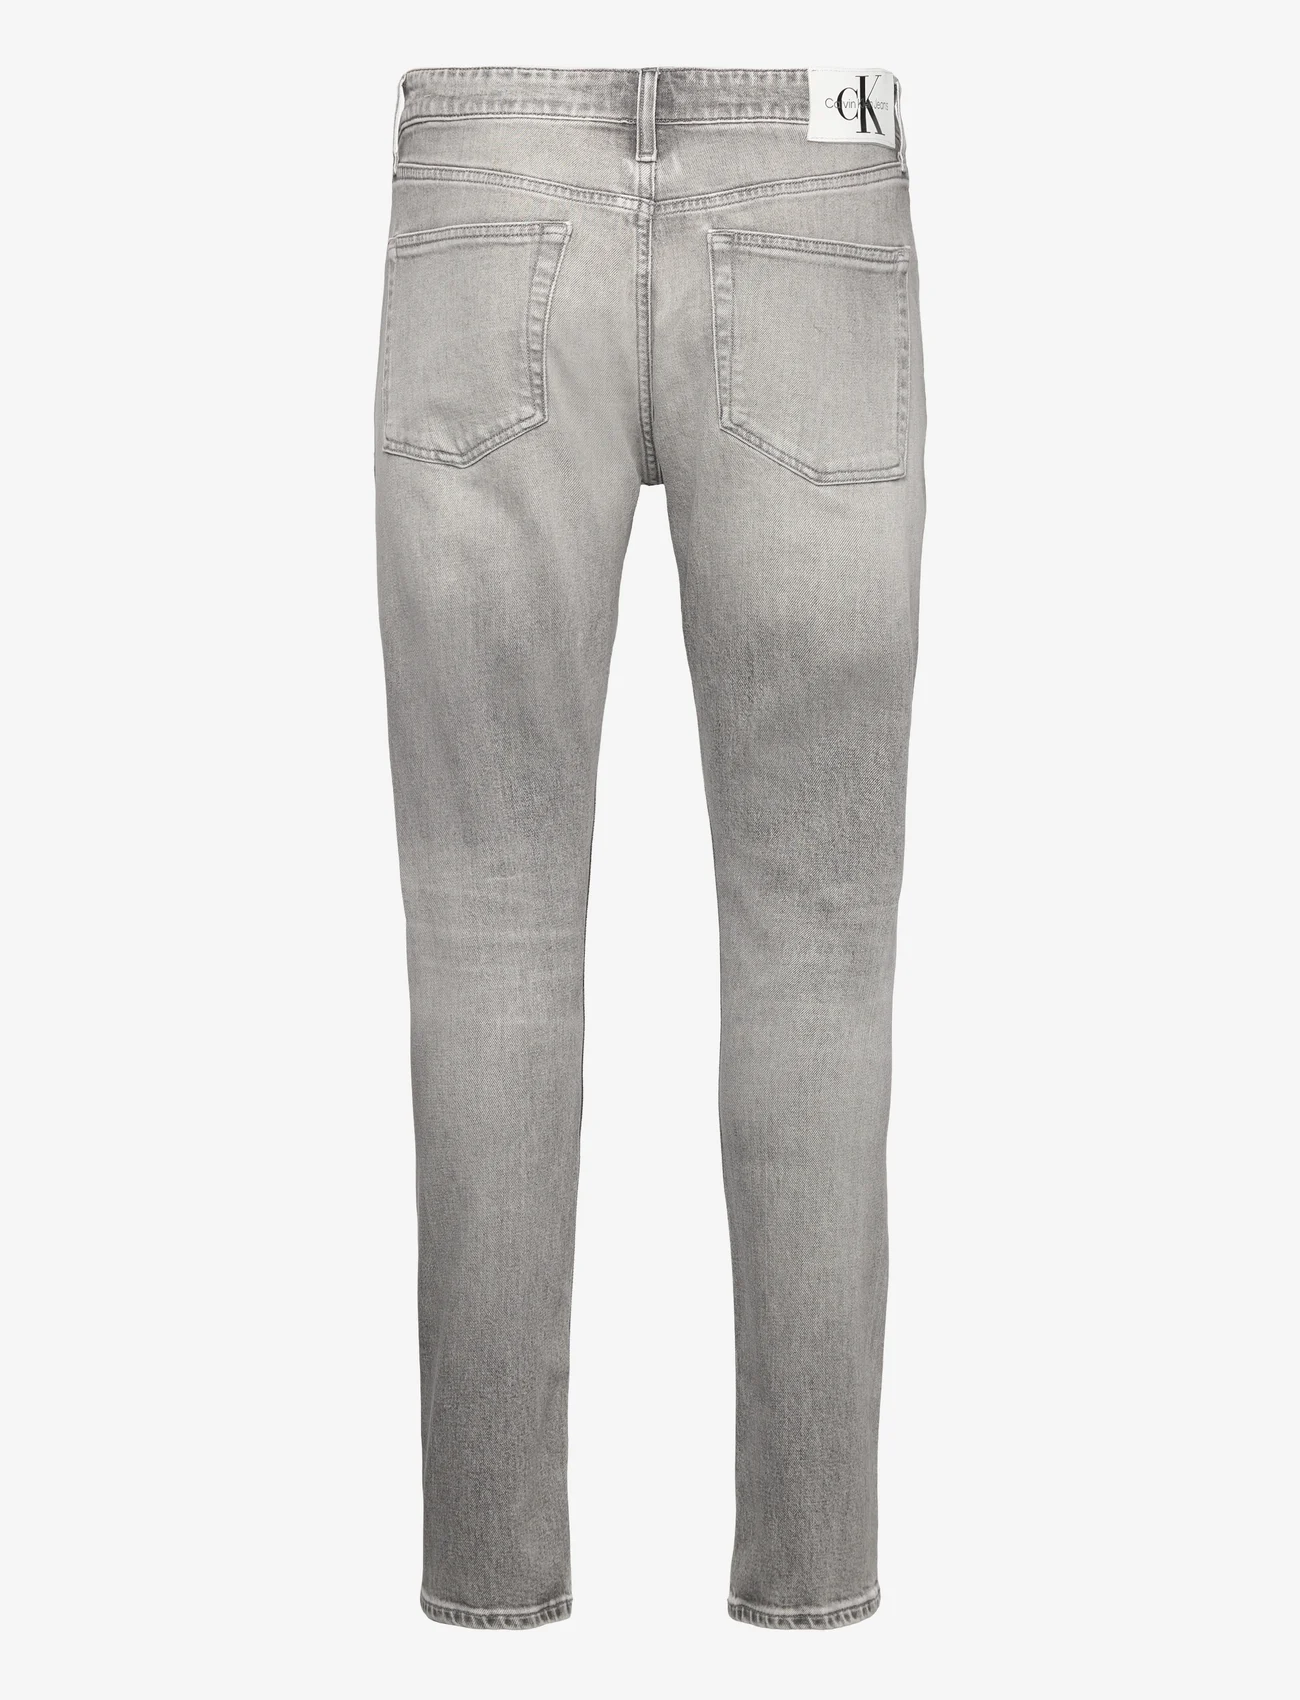 Calvin Klein Jeans - SLIM TAPER - slim fit jeans - denim grey - 1